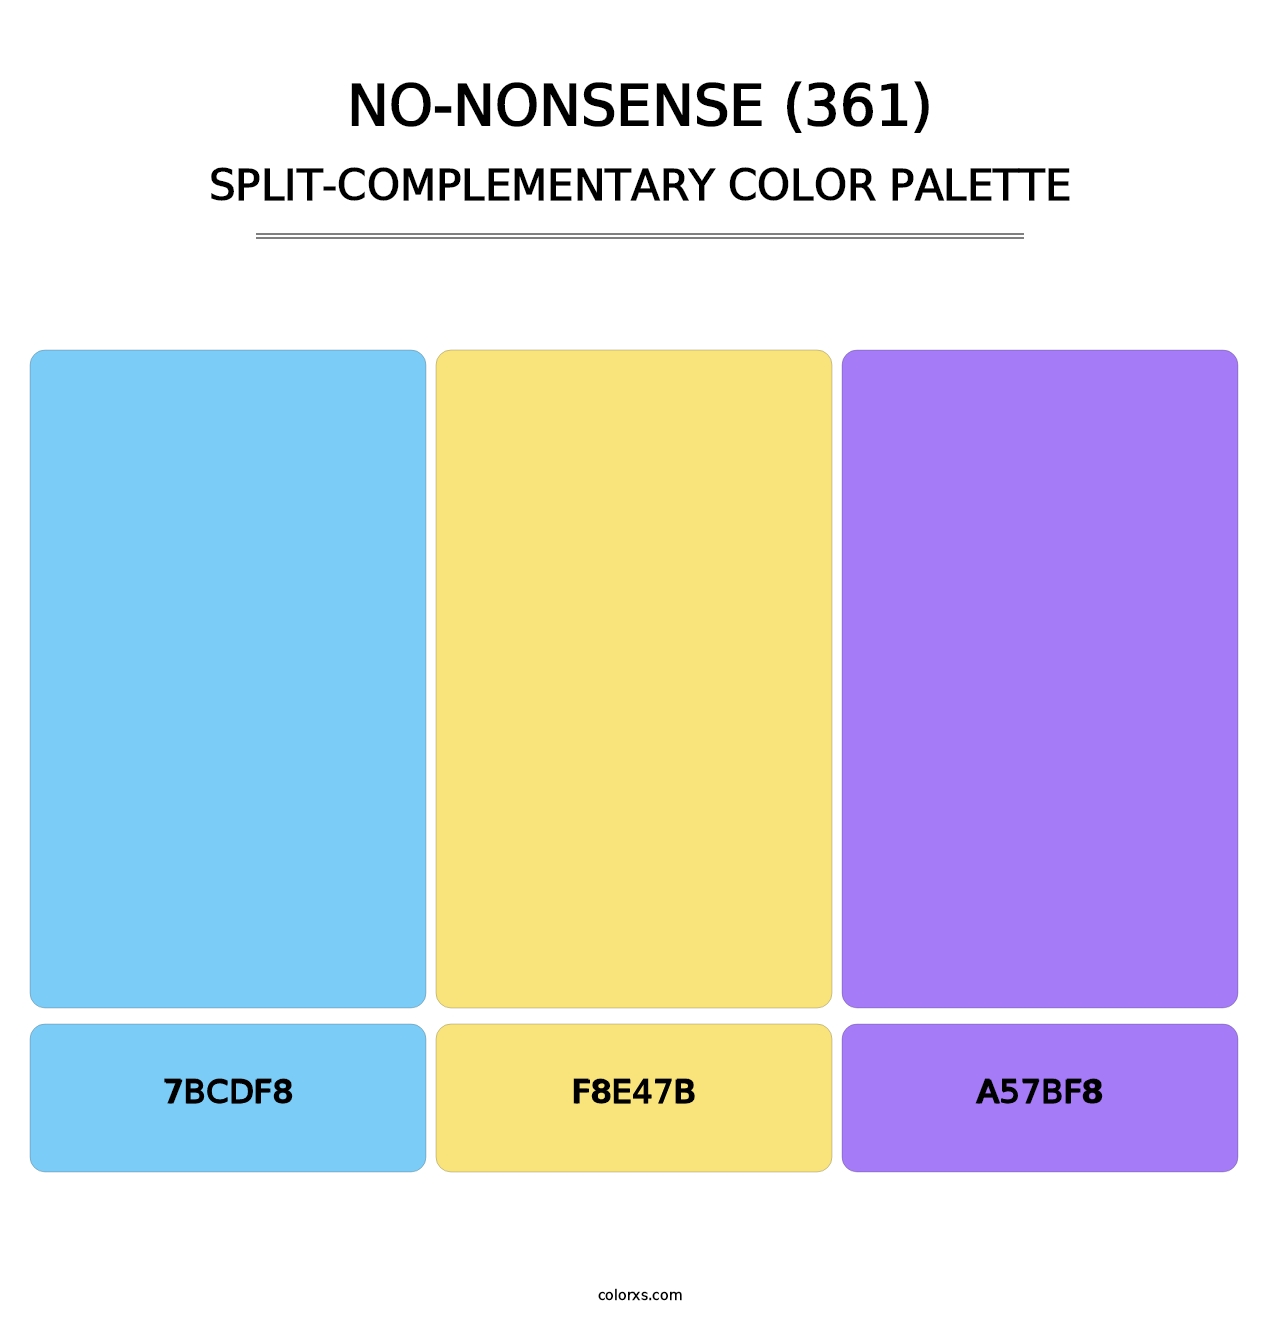 No-Nonsense (361) - Split-Complementary Color Palette